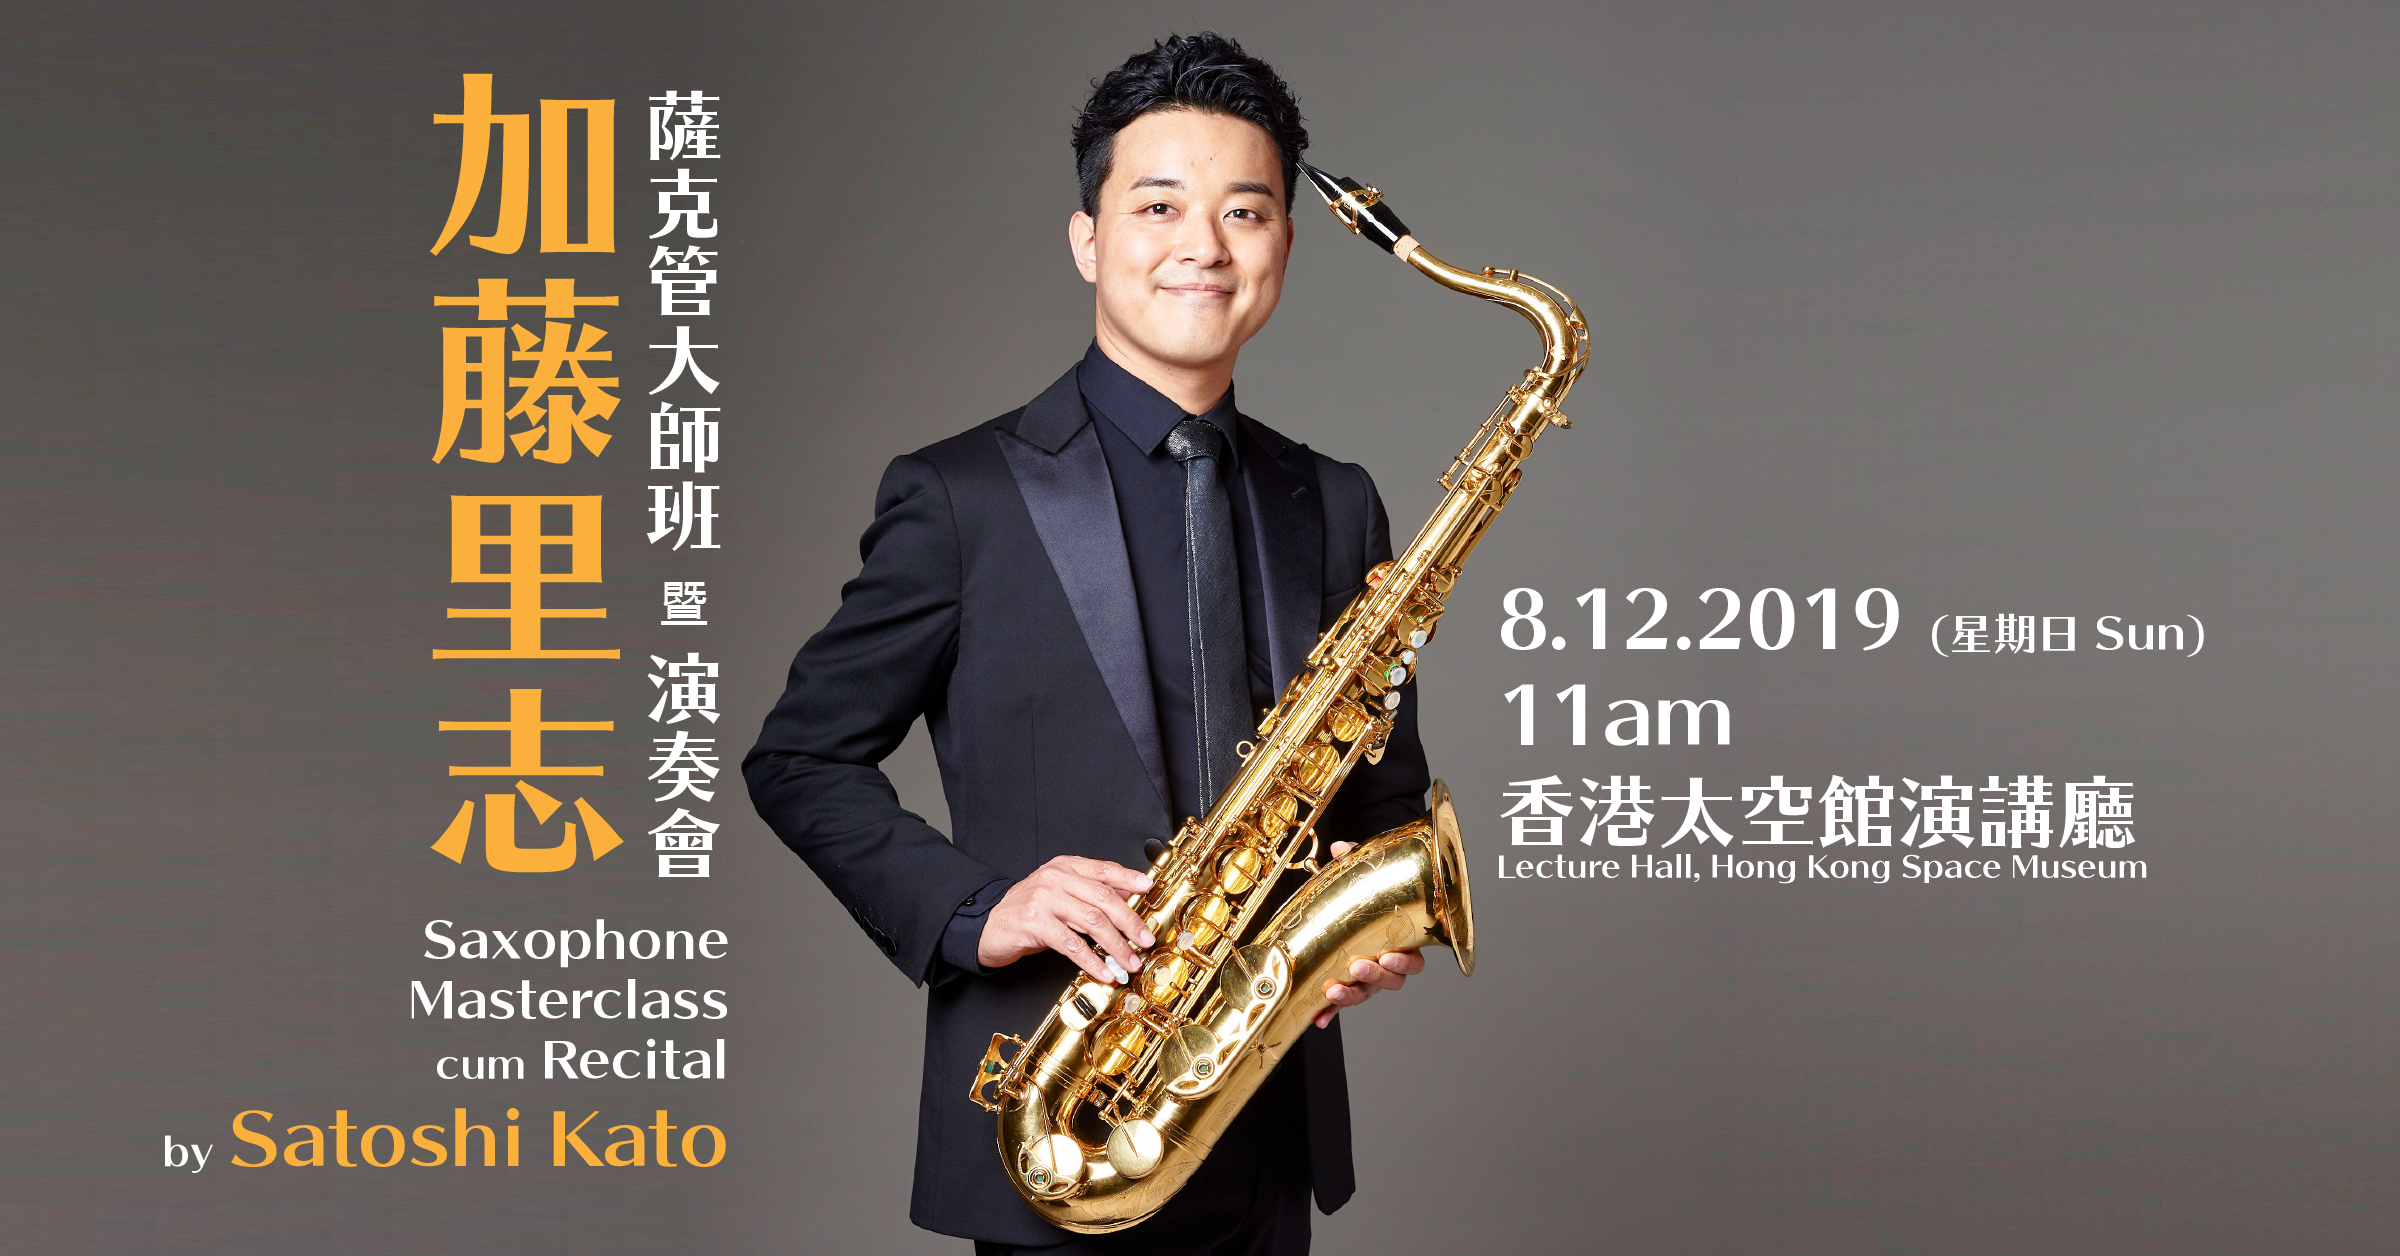 Saxophone Masterclass cum Recital by Satoshi Kato (Completed)